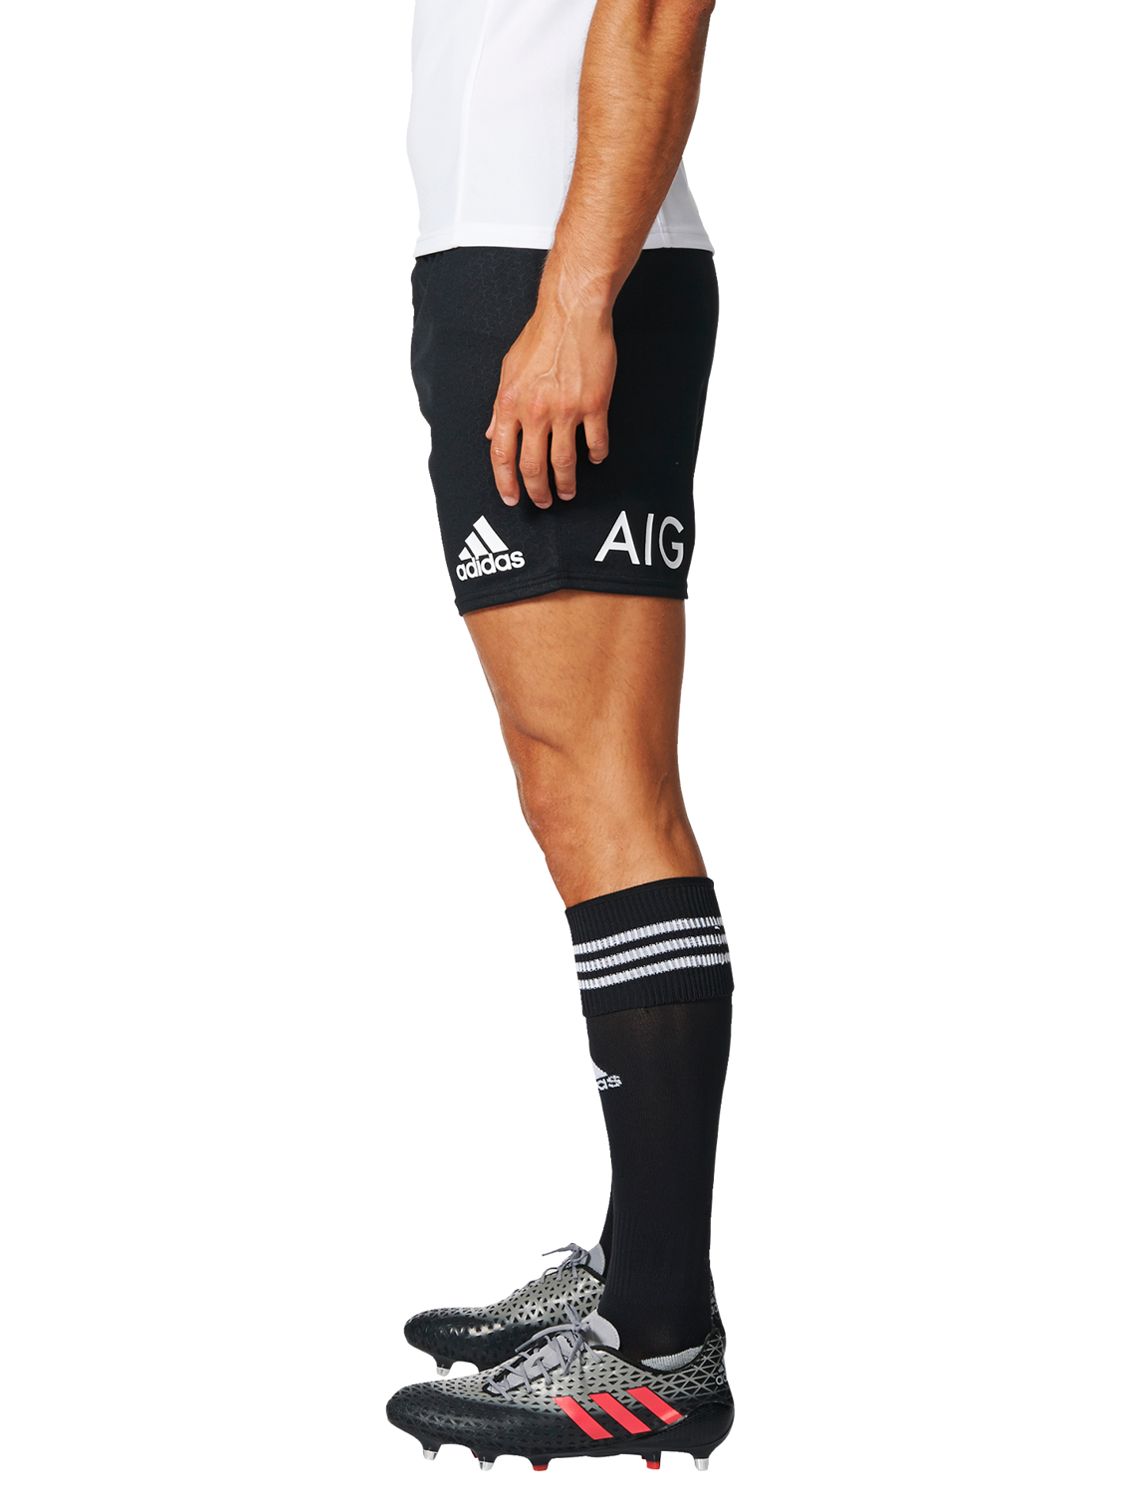 adidas all black rugby shorts